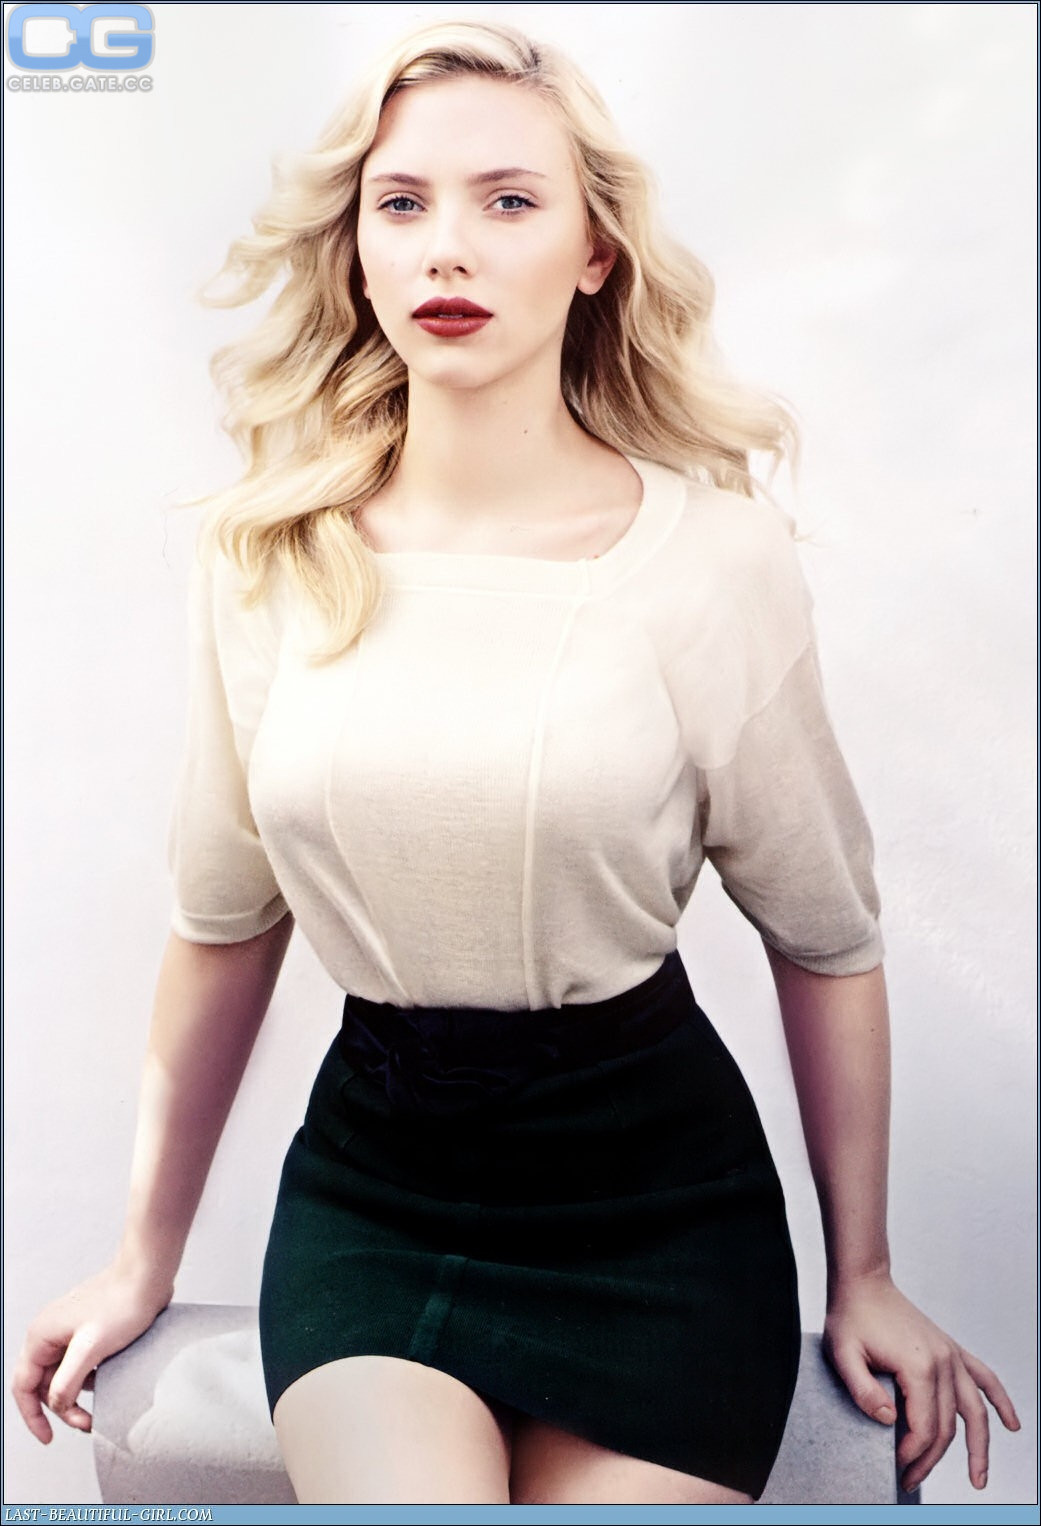 Scarlett Johansson 